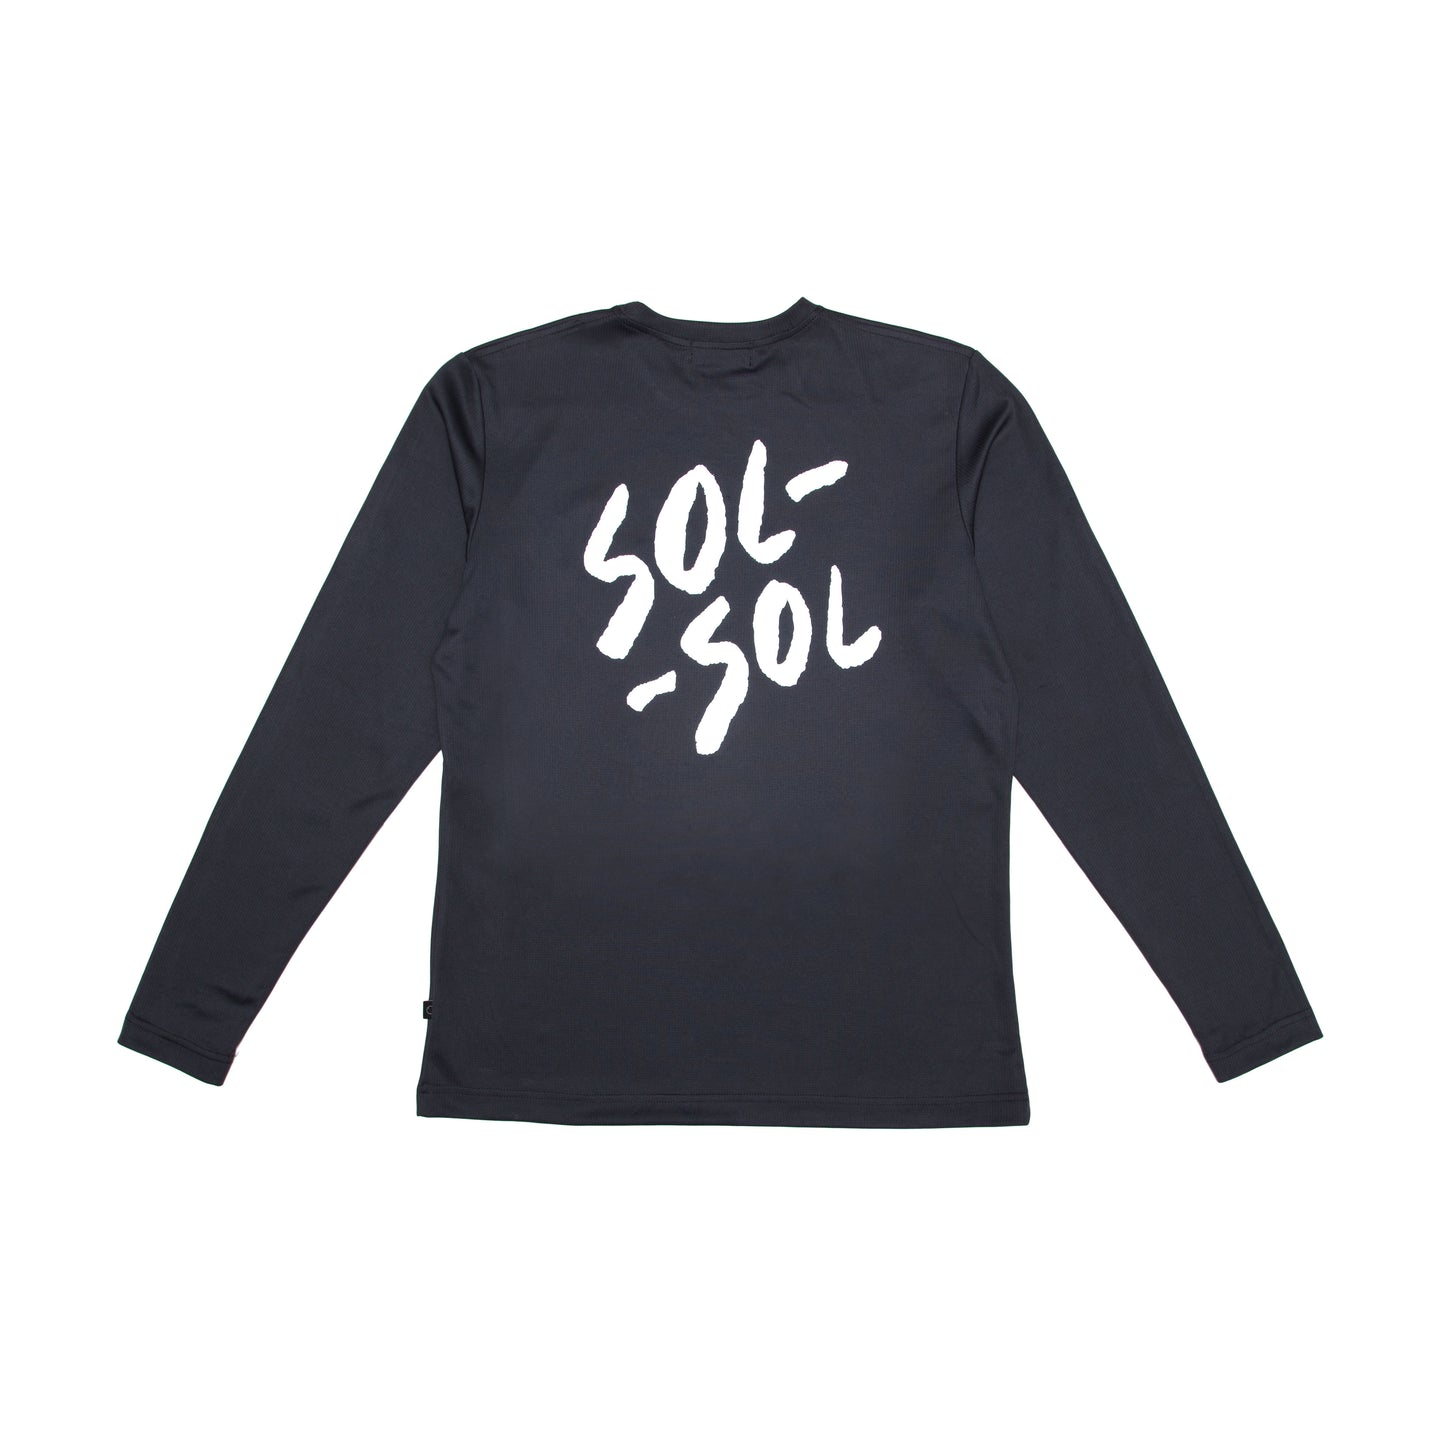 Sol Sol Long Sleeve Tech T-Shirt - Charcoal